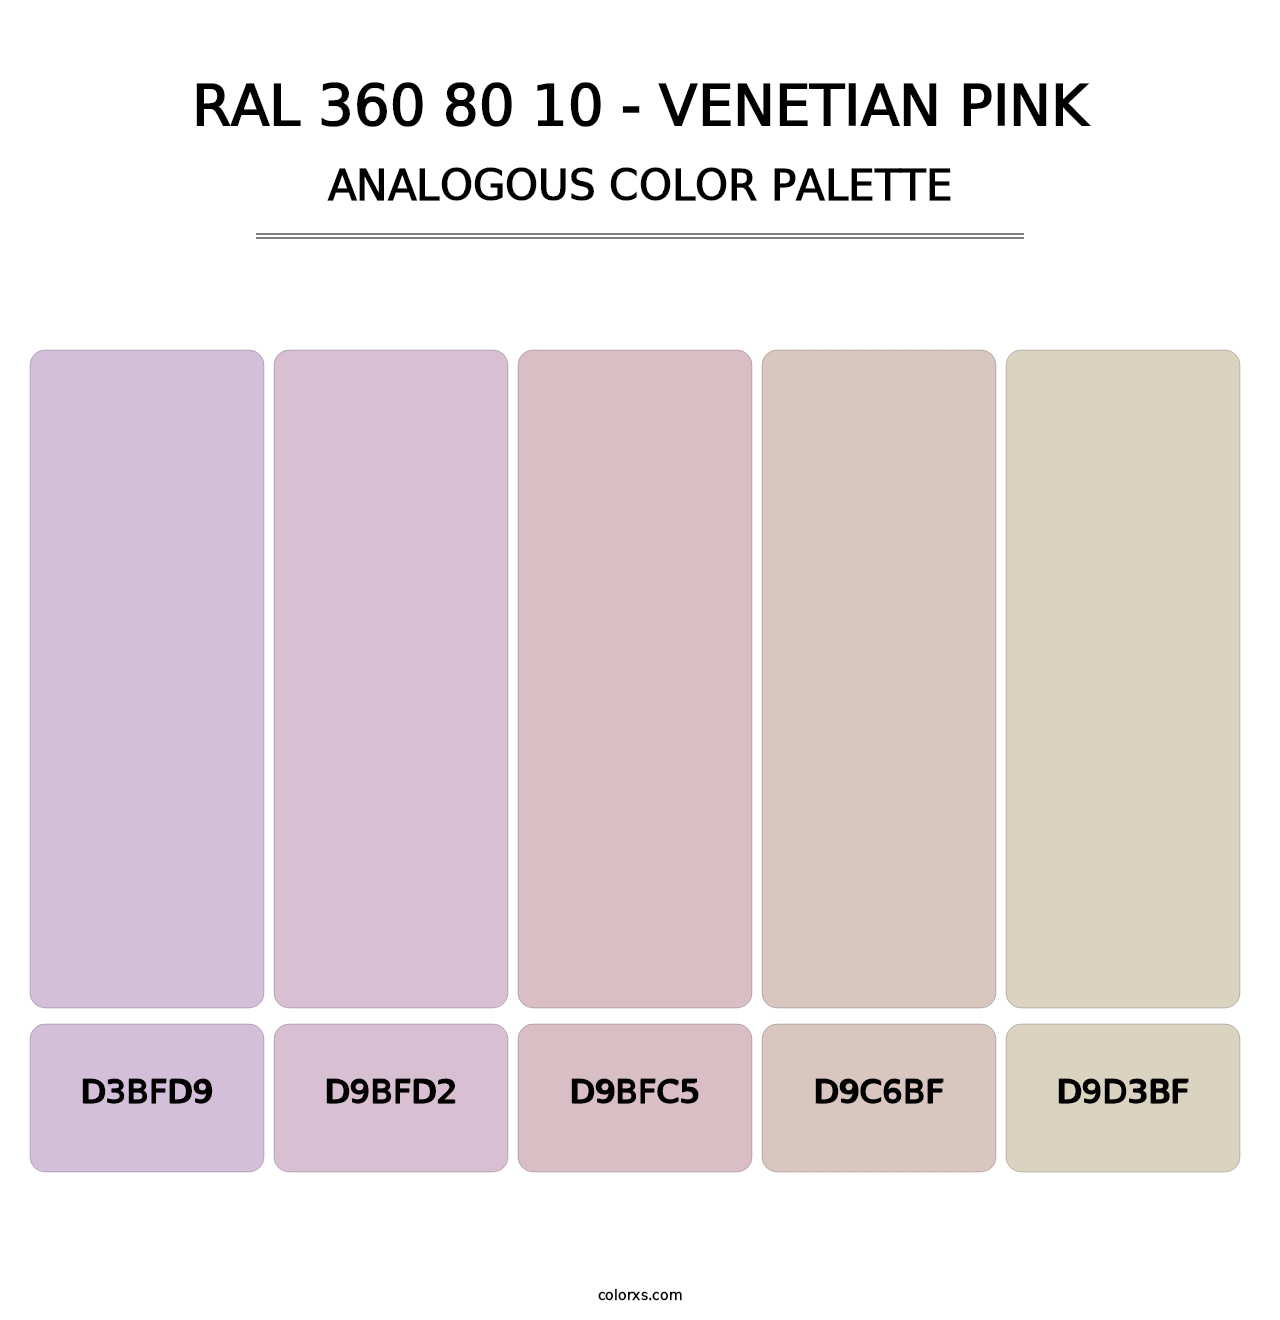 RAL 360 80 10 - Venetian Pink - Analogous Color Palette